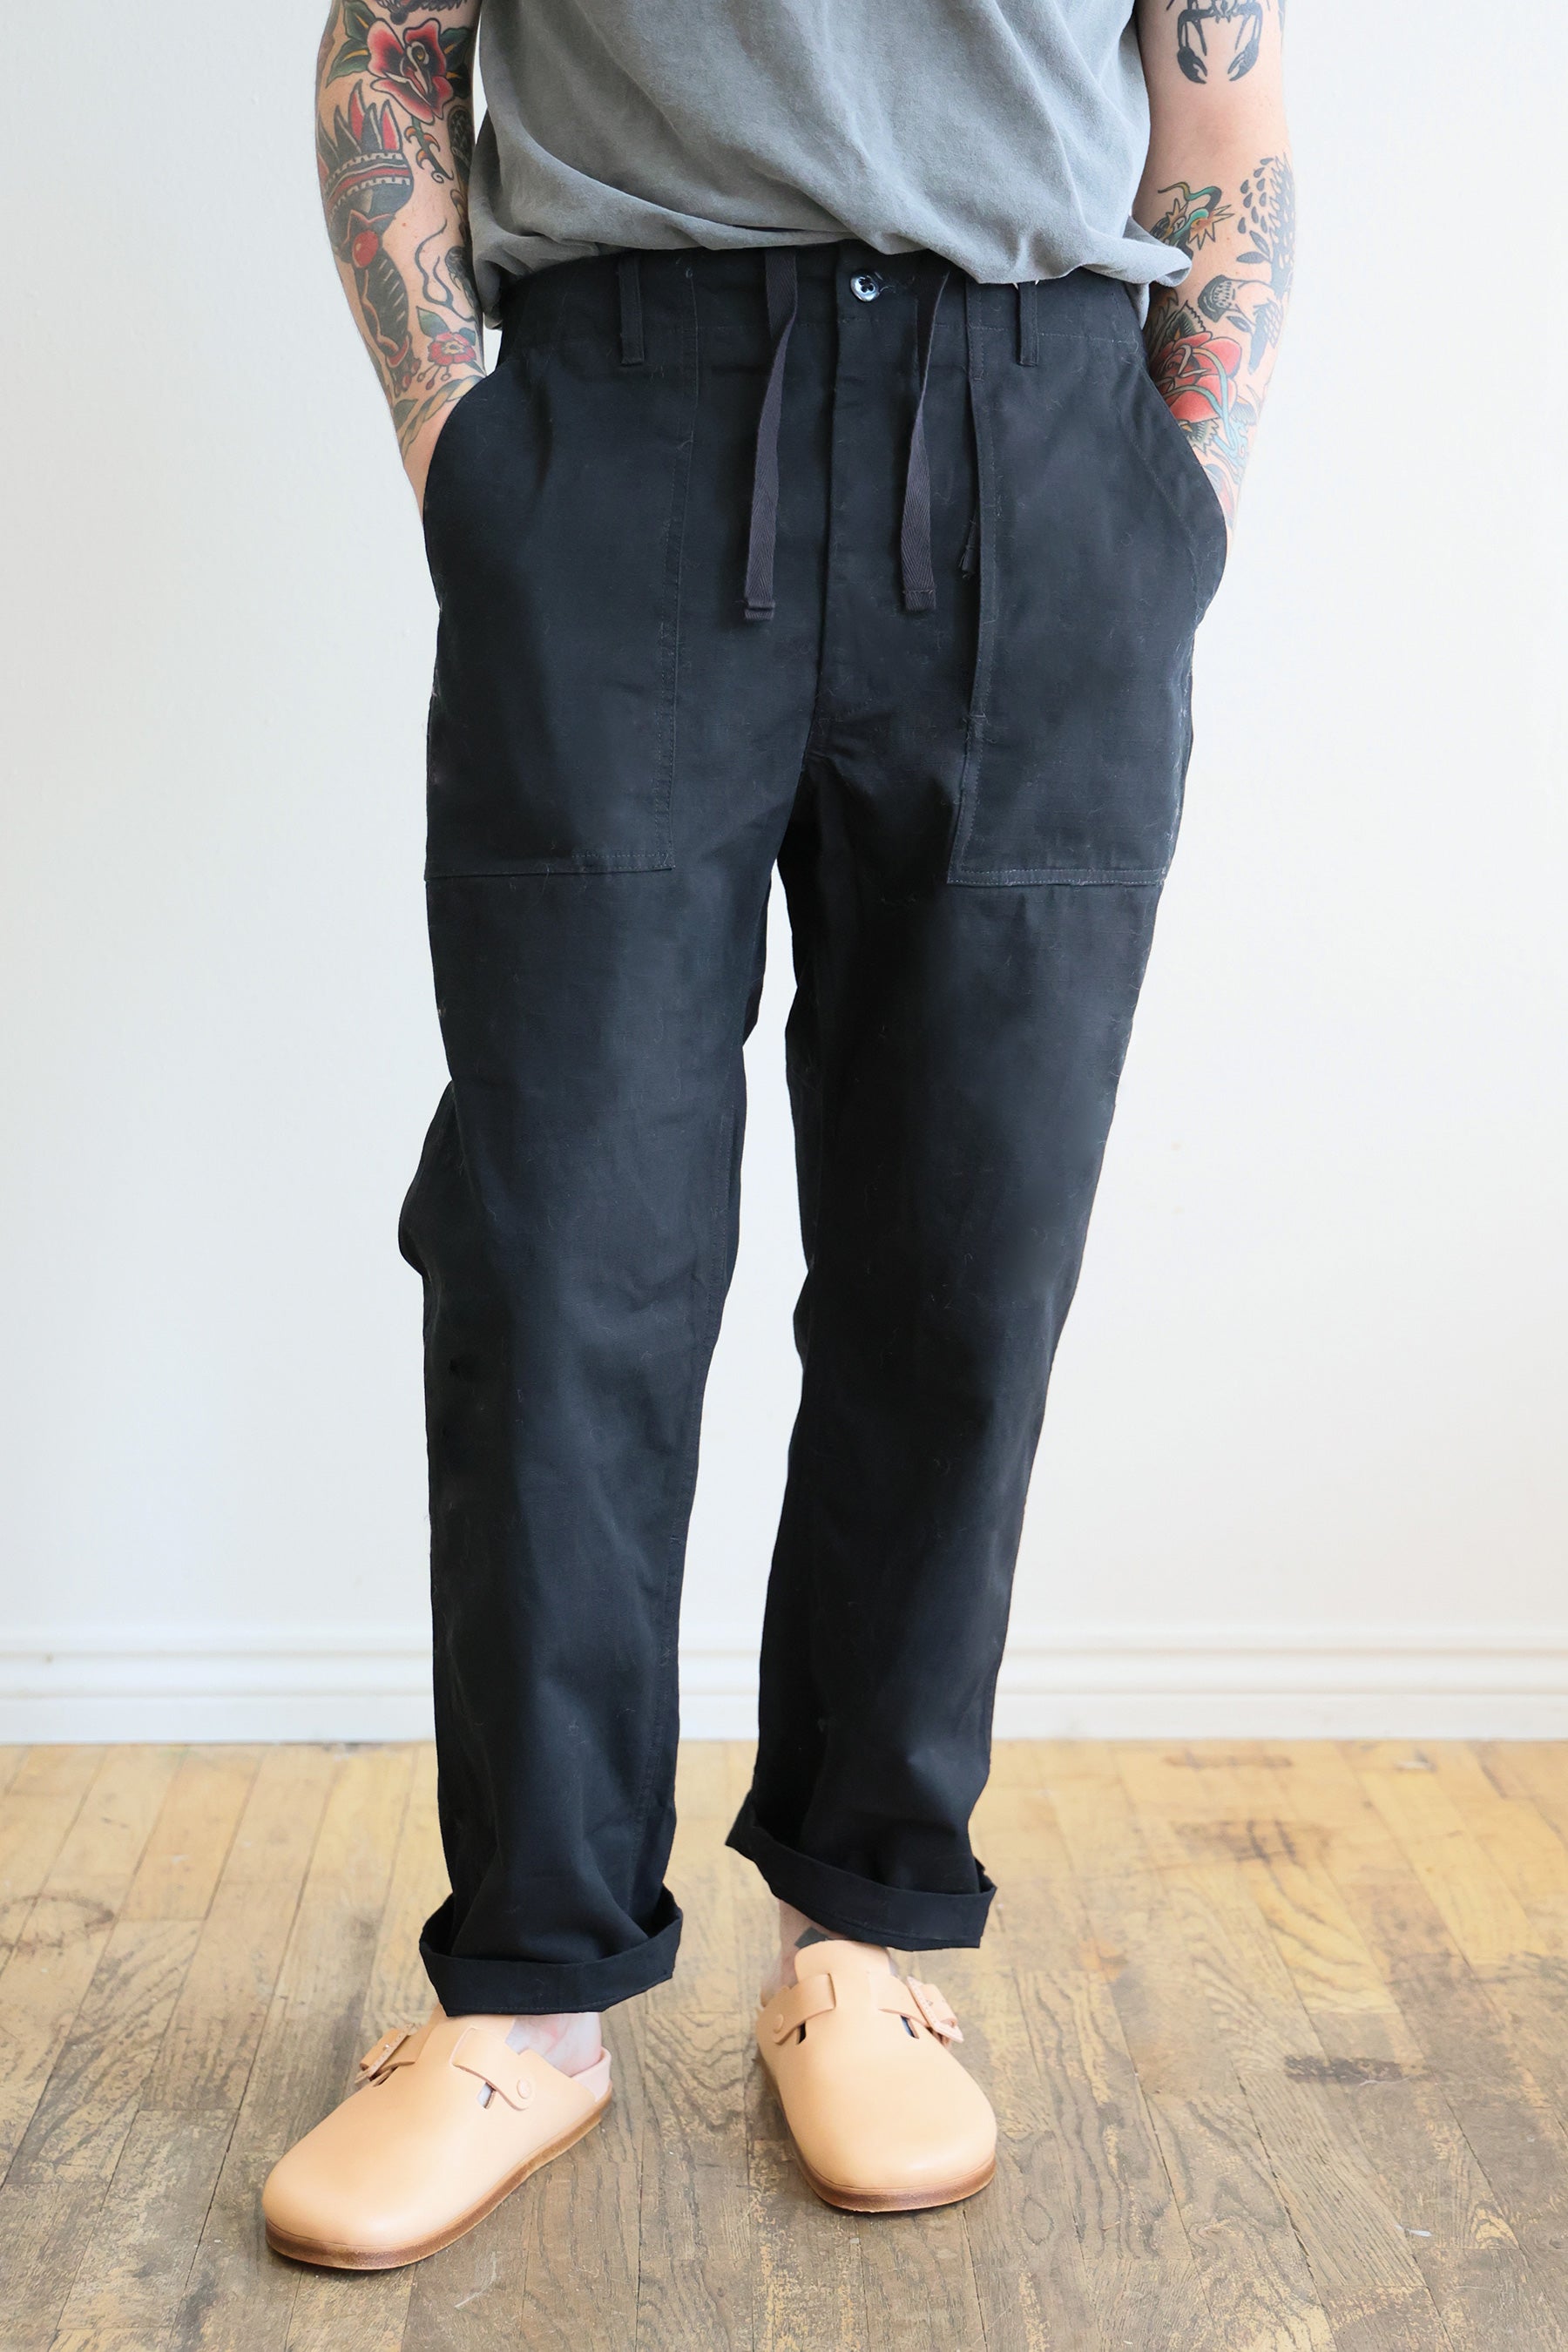 Engineered Garments - Fatigue Pant - Black Heavyweight Cotton Ripstop - Canoe Club